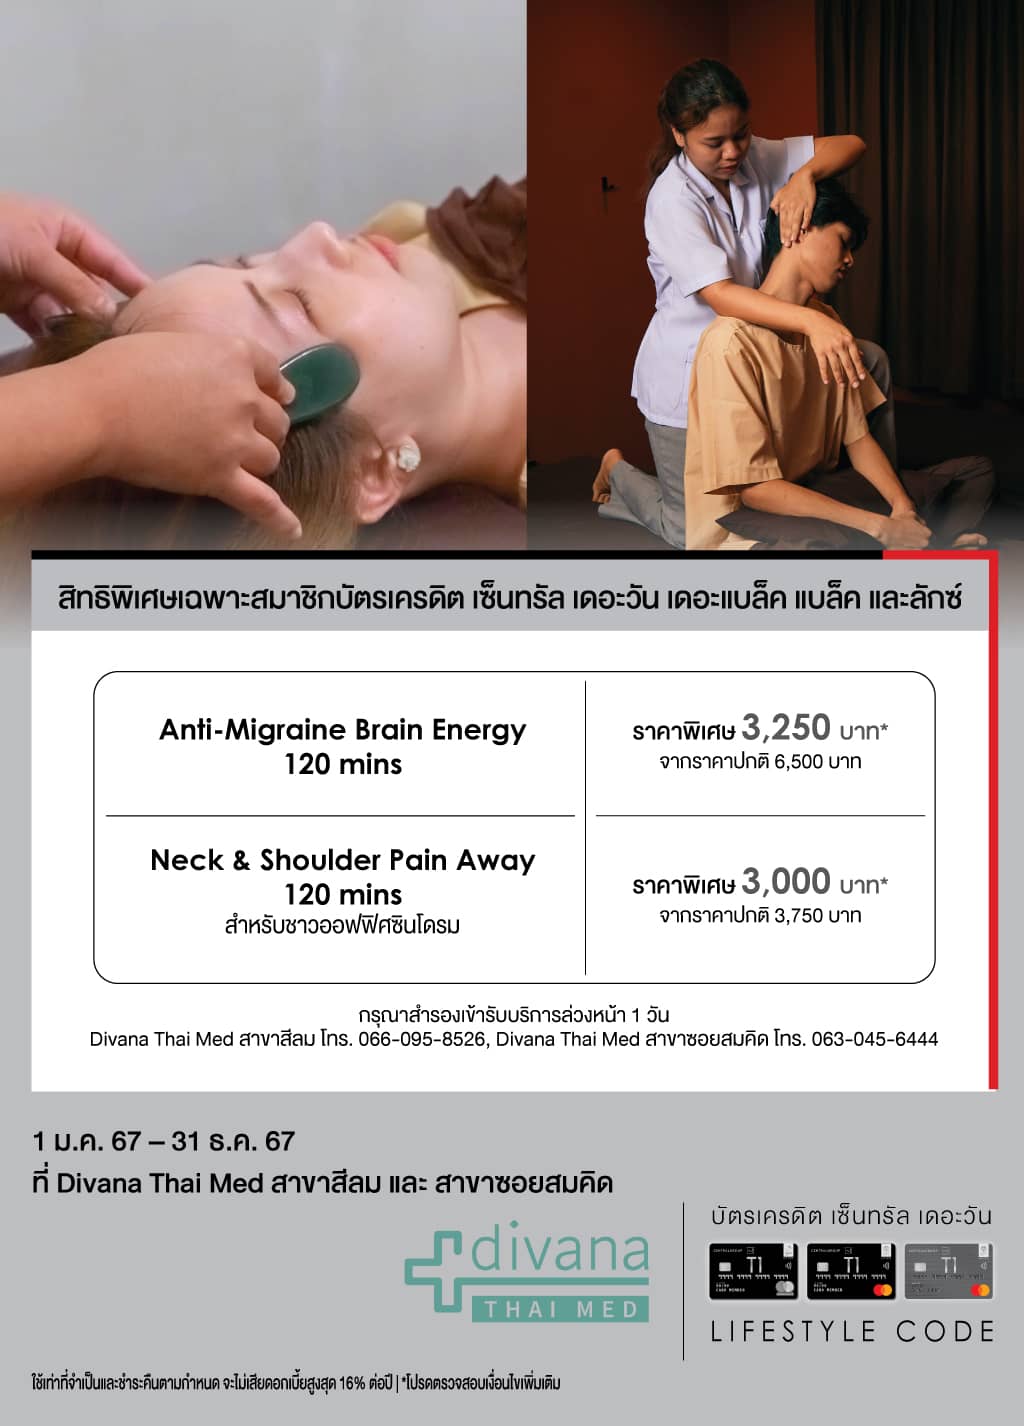 Anti-Migraine Brain Energy 120 นาที ราคาพิเศษ 3,250 บาท* + Neck & Shoulder Pain Away 120 mins ราคาพิเศษ 3,000 บาท* ที่ Divana Thai Med | บัตรเครดิต | สมัครบัตรเครดิต | สมัครบัตรเครดิตออนไลน์ | สิทธิประโยชน์บัตรเครดิต | สมัครสินเชื่อออนไลน์ | บัตรเครดิต ผ่อน 0% | บัตรเครดิต ใช้ต่างประเทศ | บัตรเครดิต ท่องเที่ยว | บัตรเครดิตเติมน้ำมัน